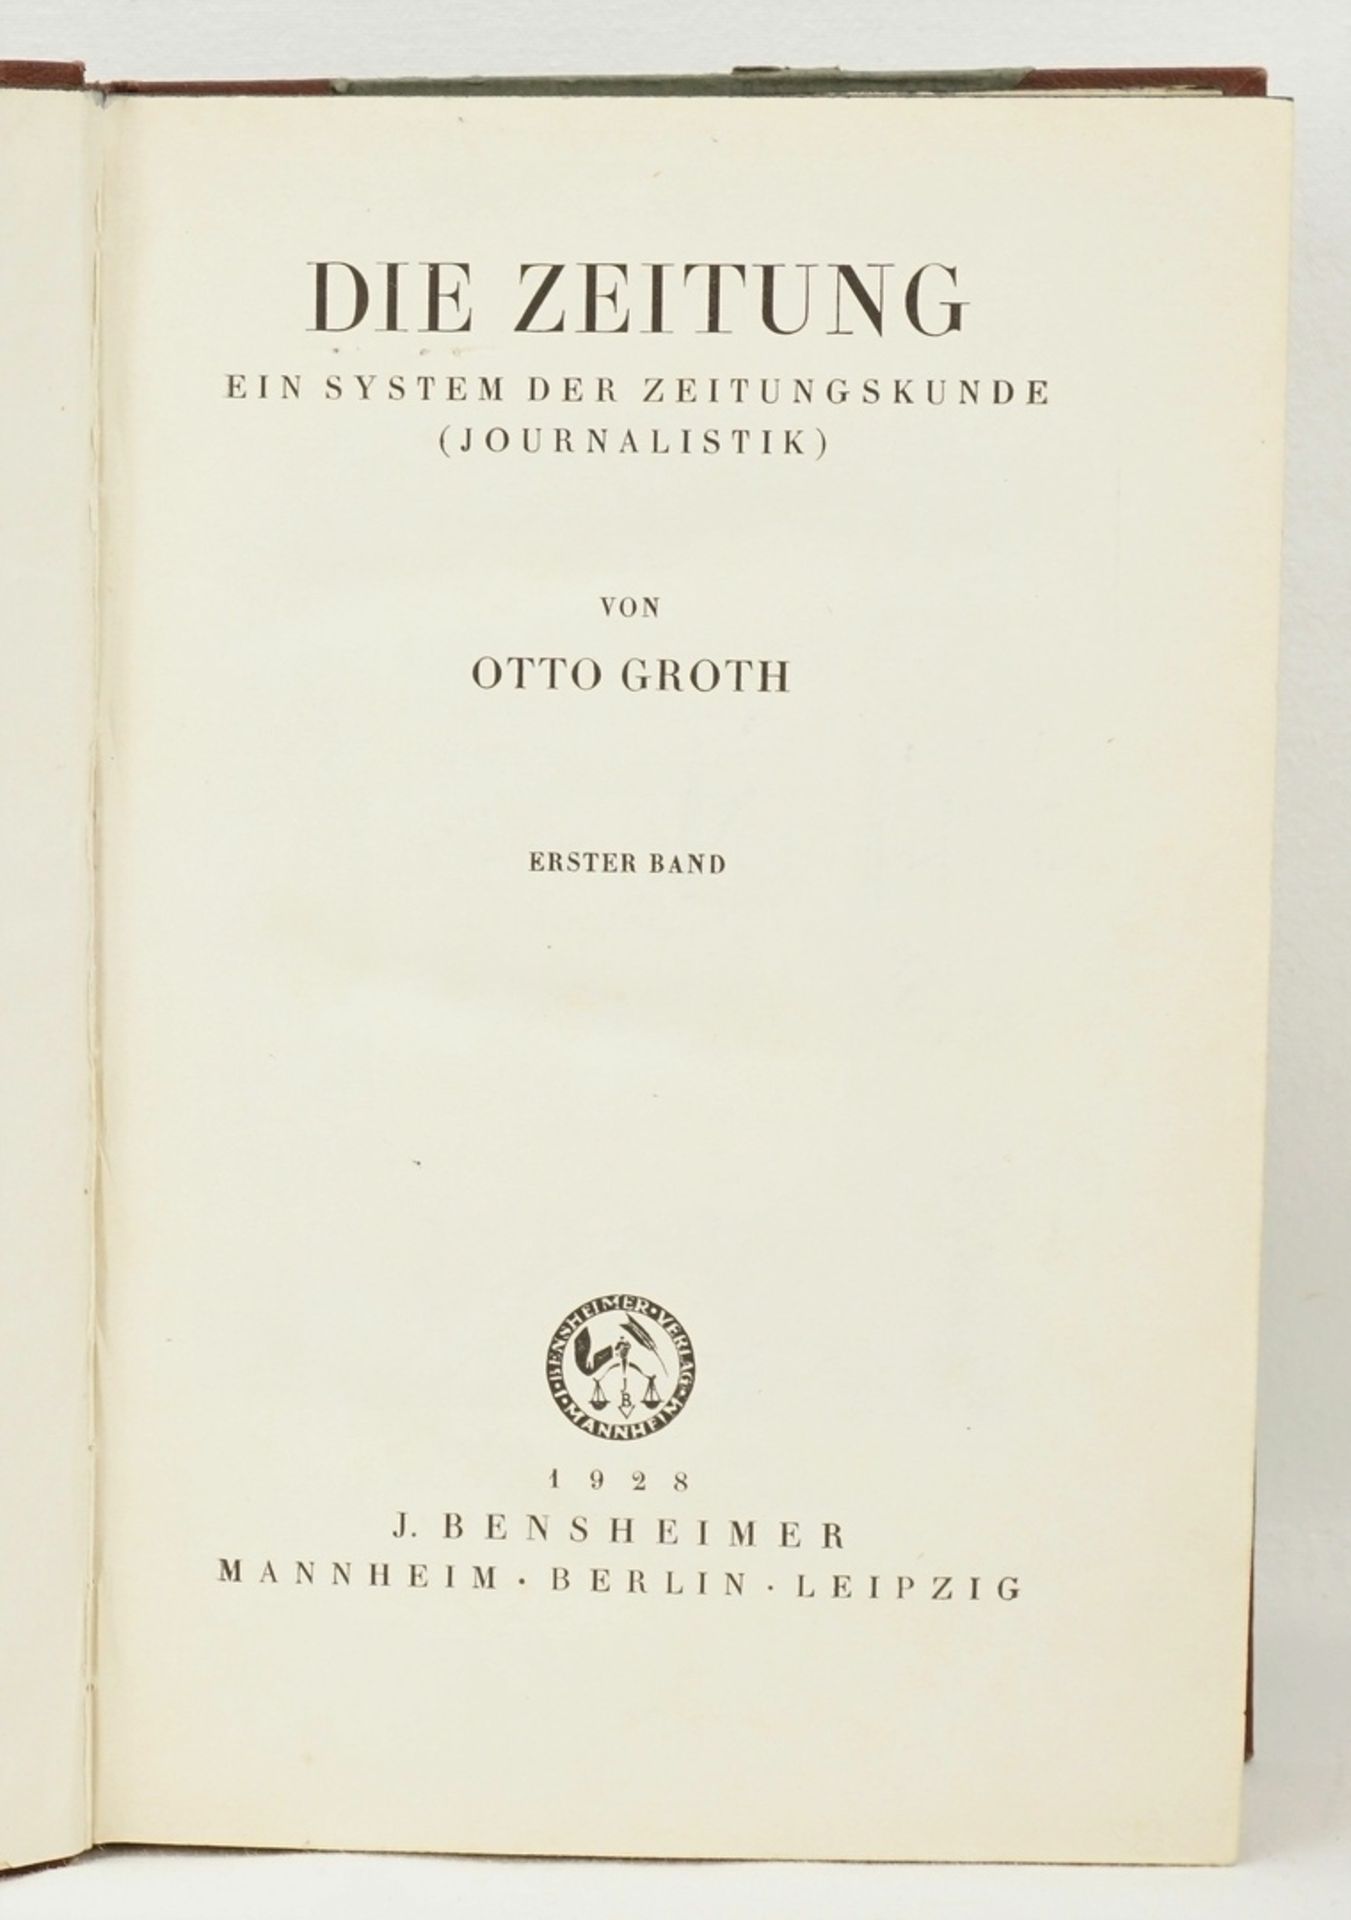 Otto Groth, "Die Zeitung" - Image 3 of 3